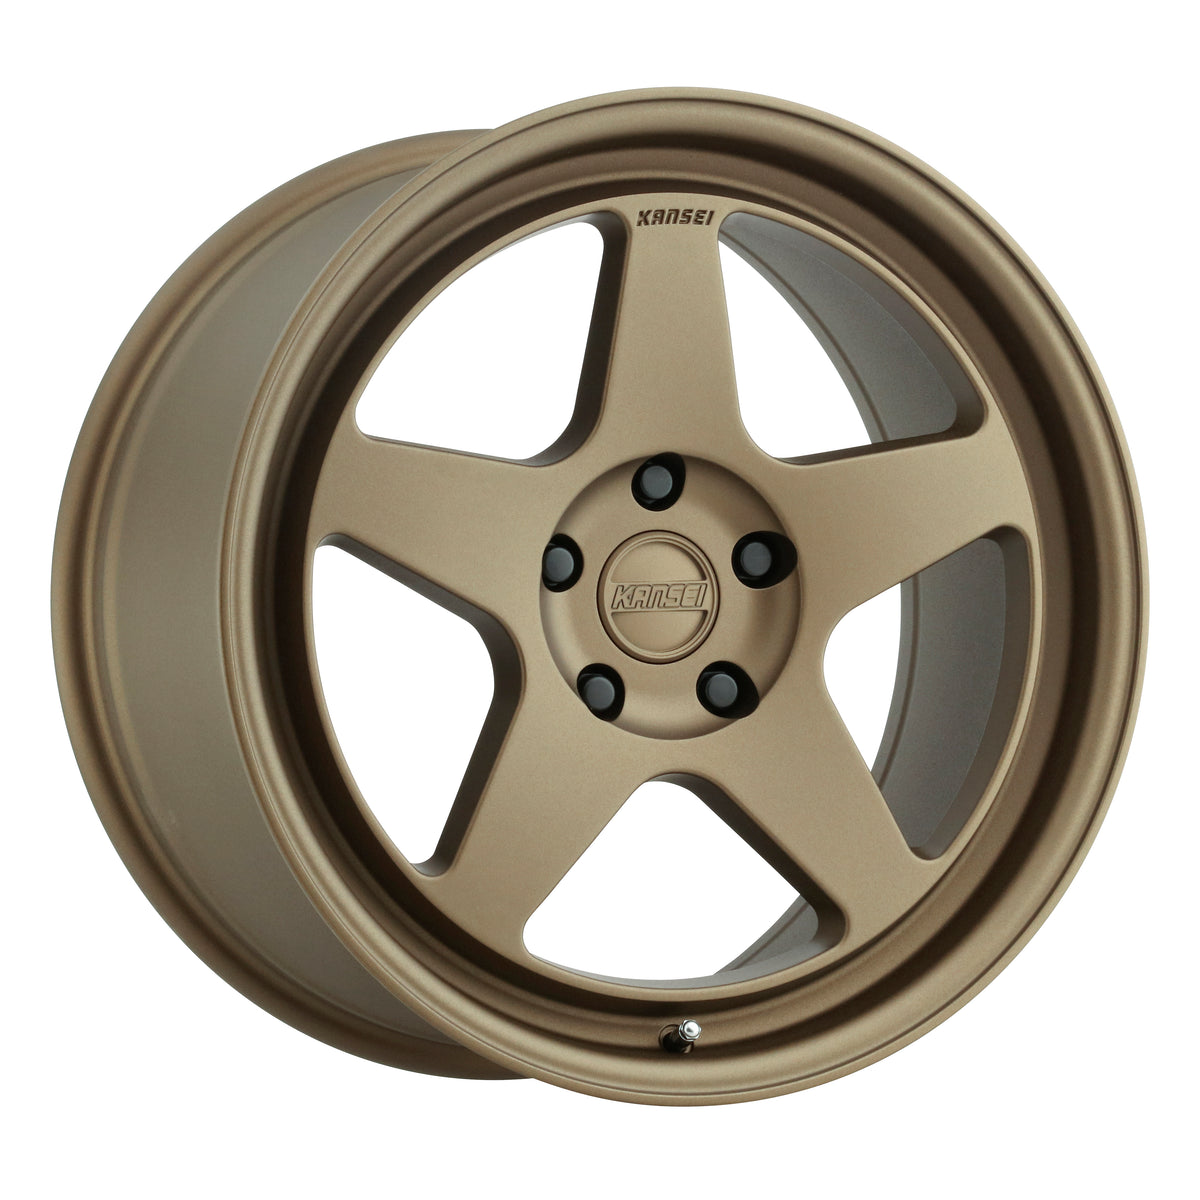 K12B KNP Wheel, Size: 18" x 9", Bolt Pattern: 5 x 100 mm, Backspace: 6.38" [Finish: Bronze]